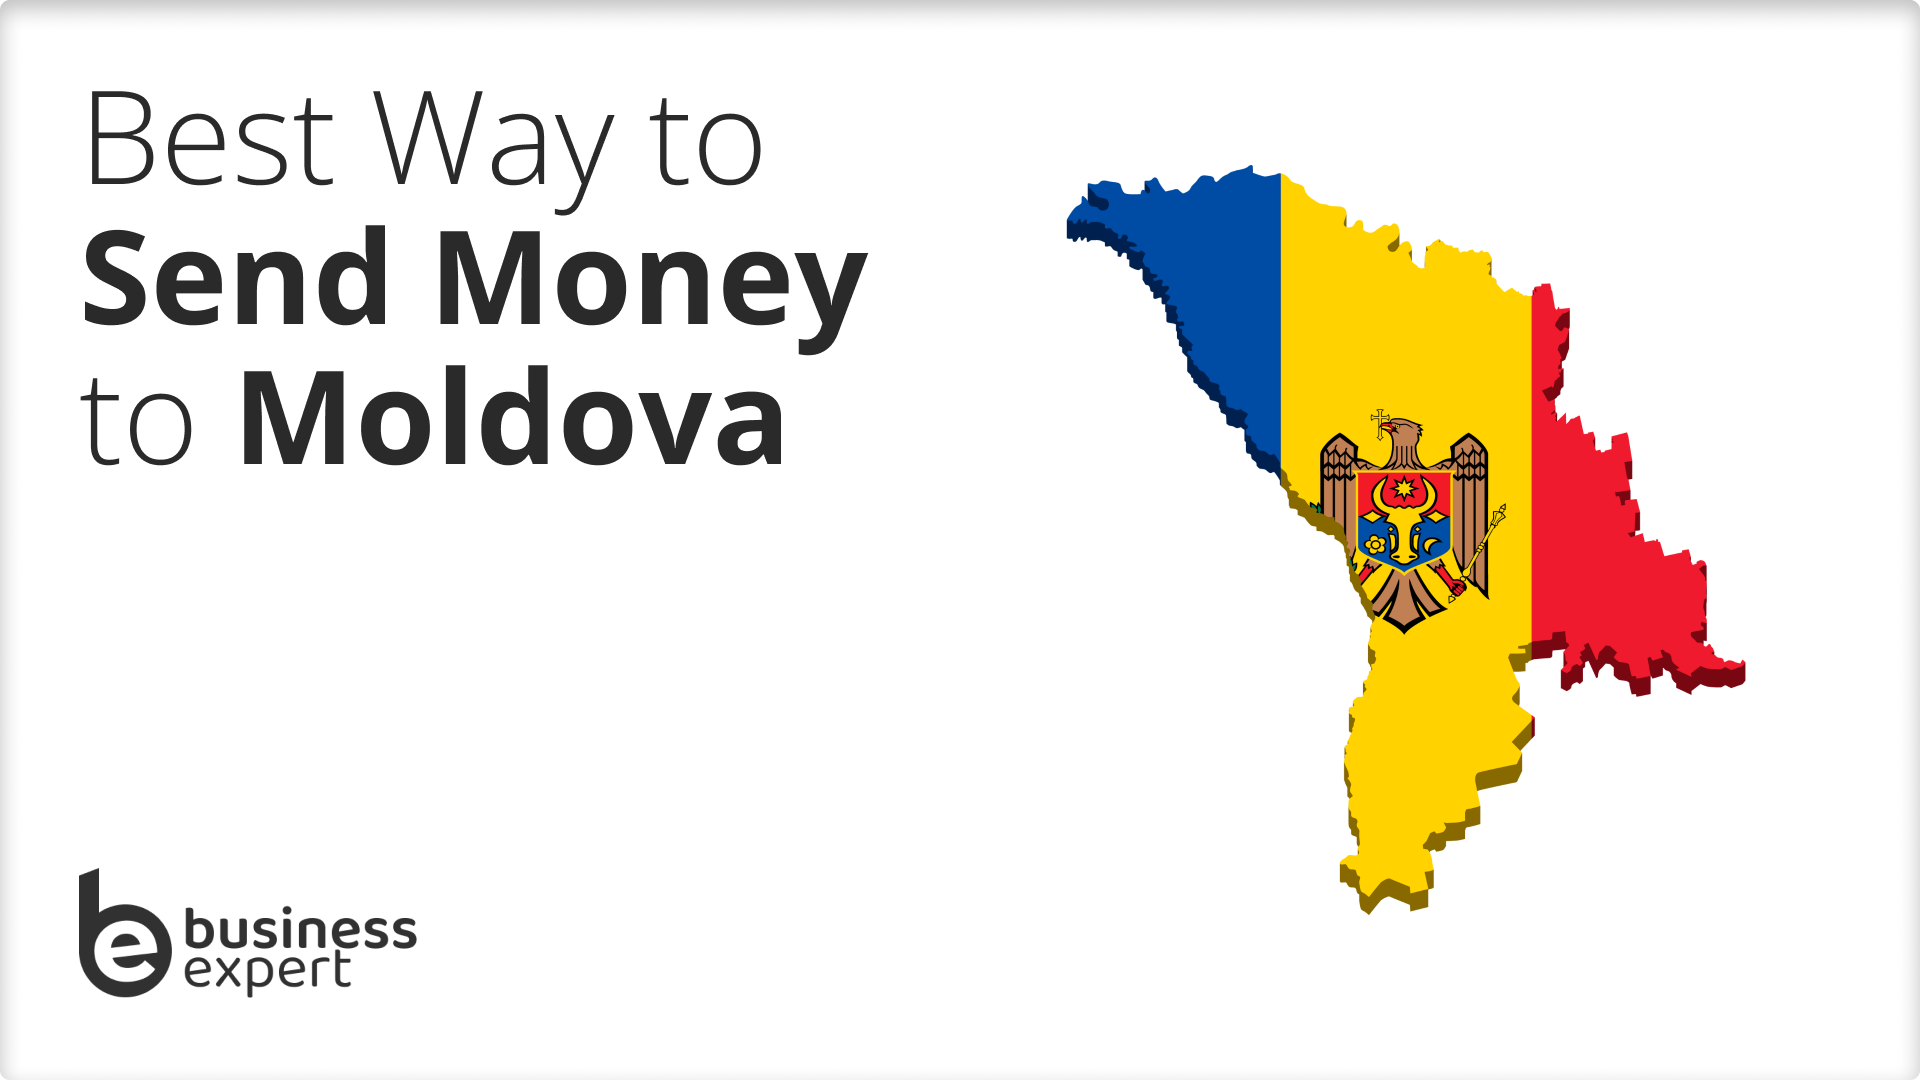 Best Way to Send Money to Moldova